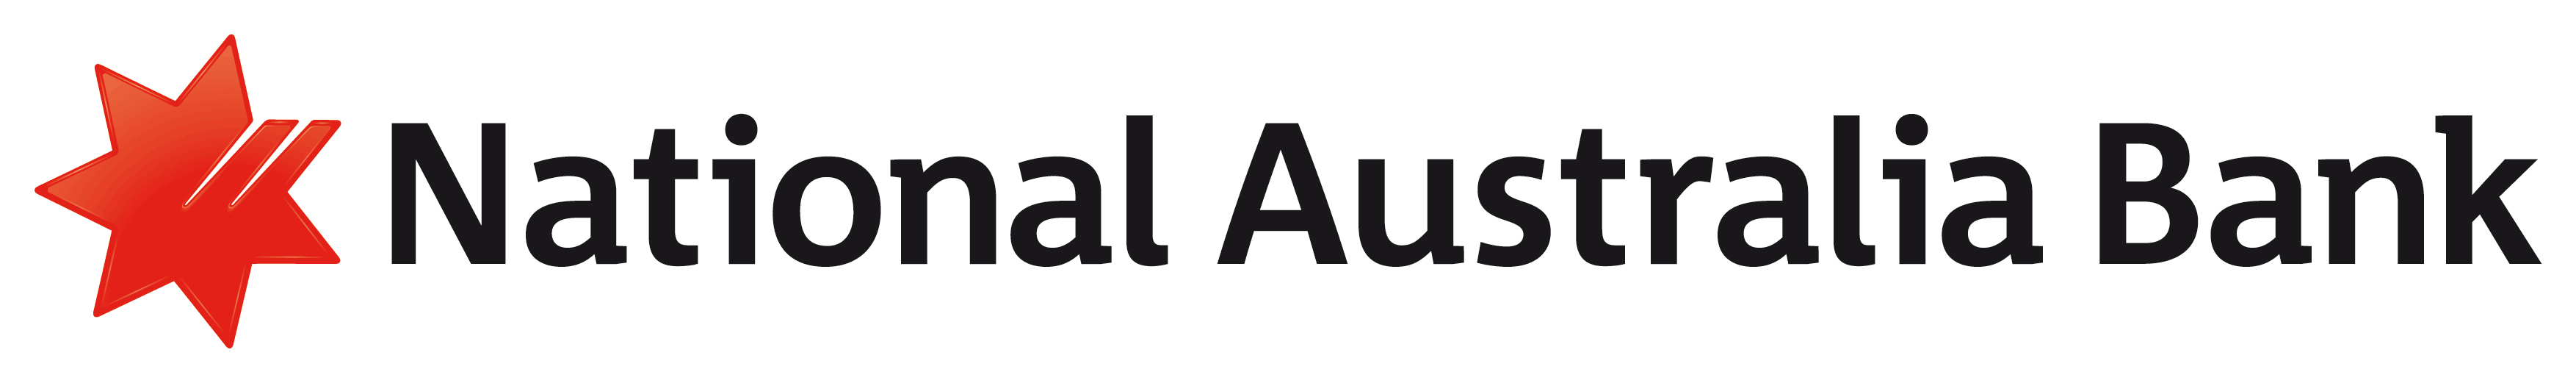 Логотип корпорации National Australia Bank